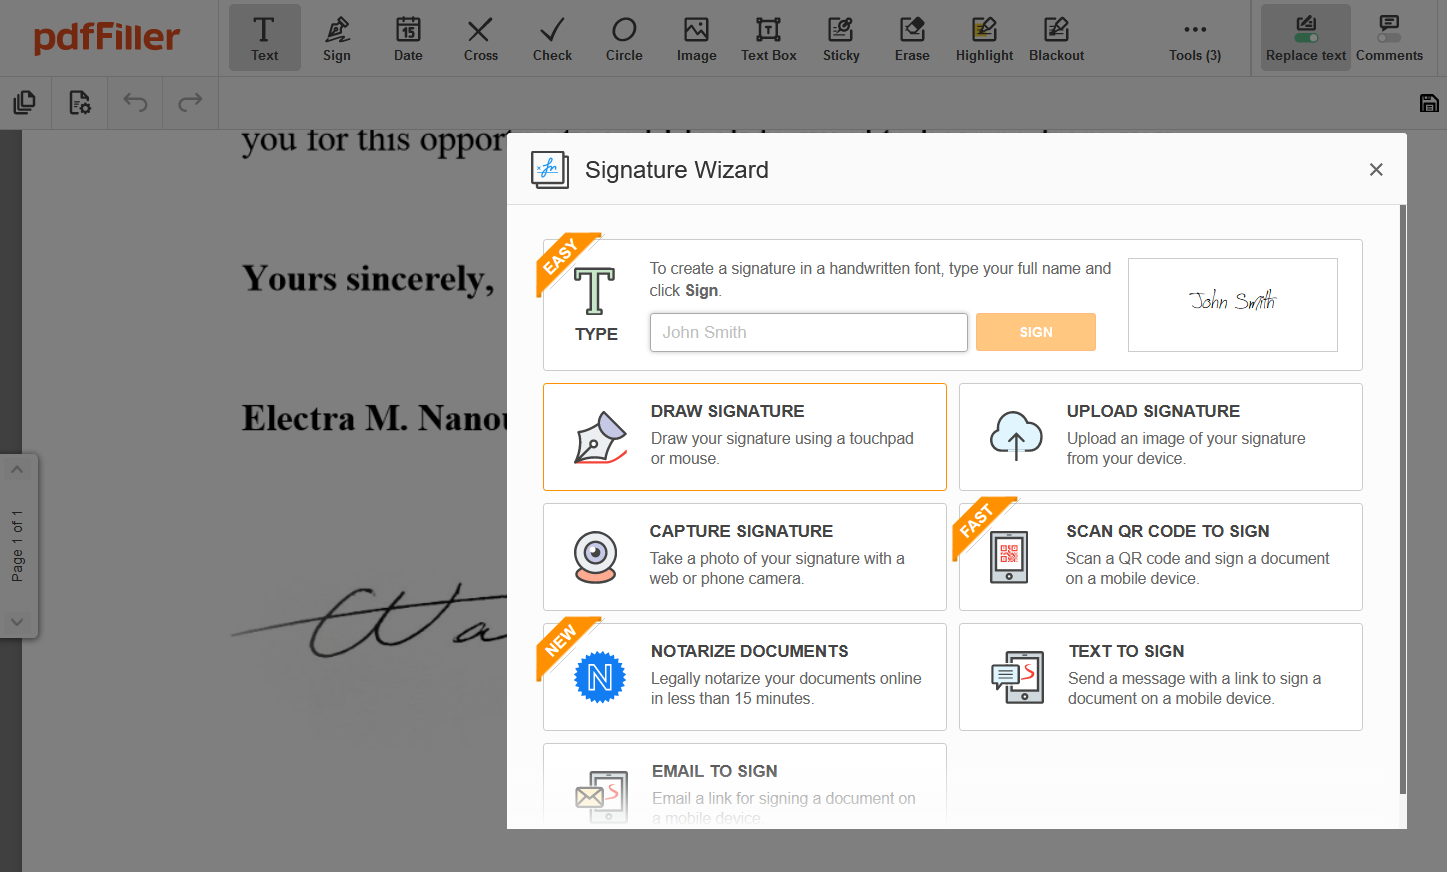 pdffiller signature wizard options - Come firmare un documento online